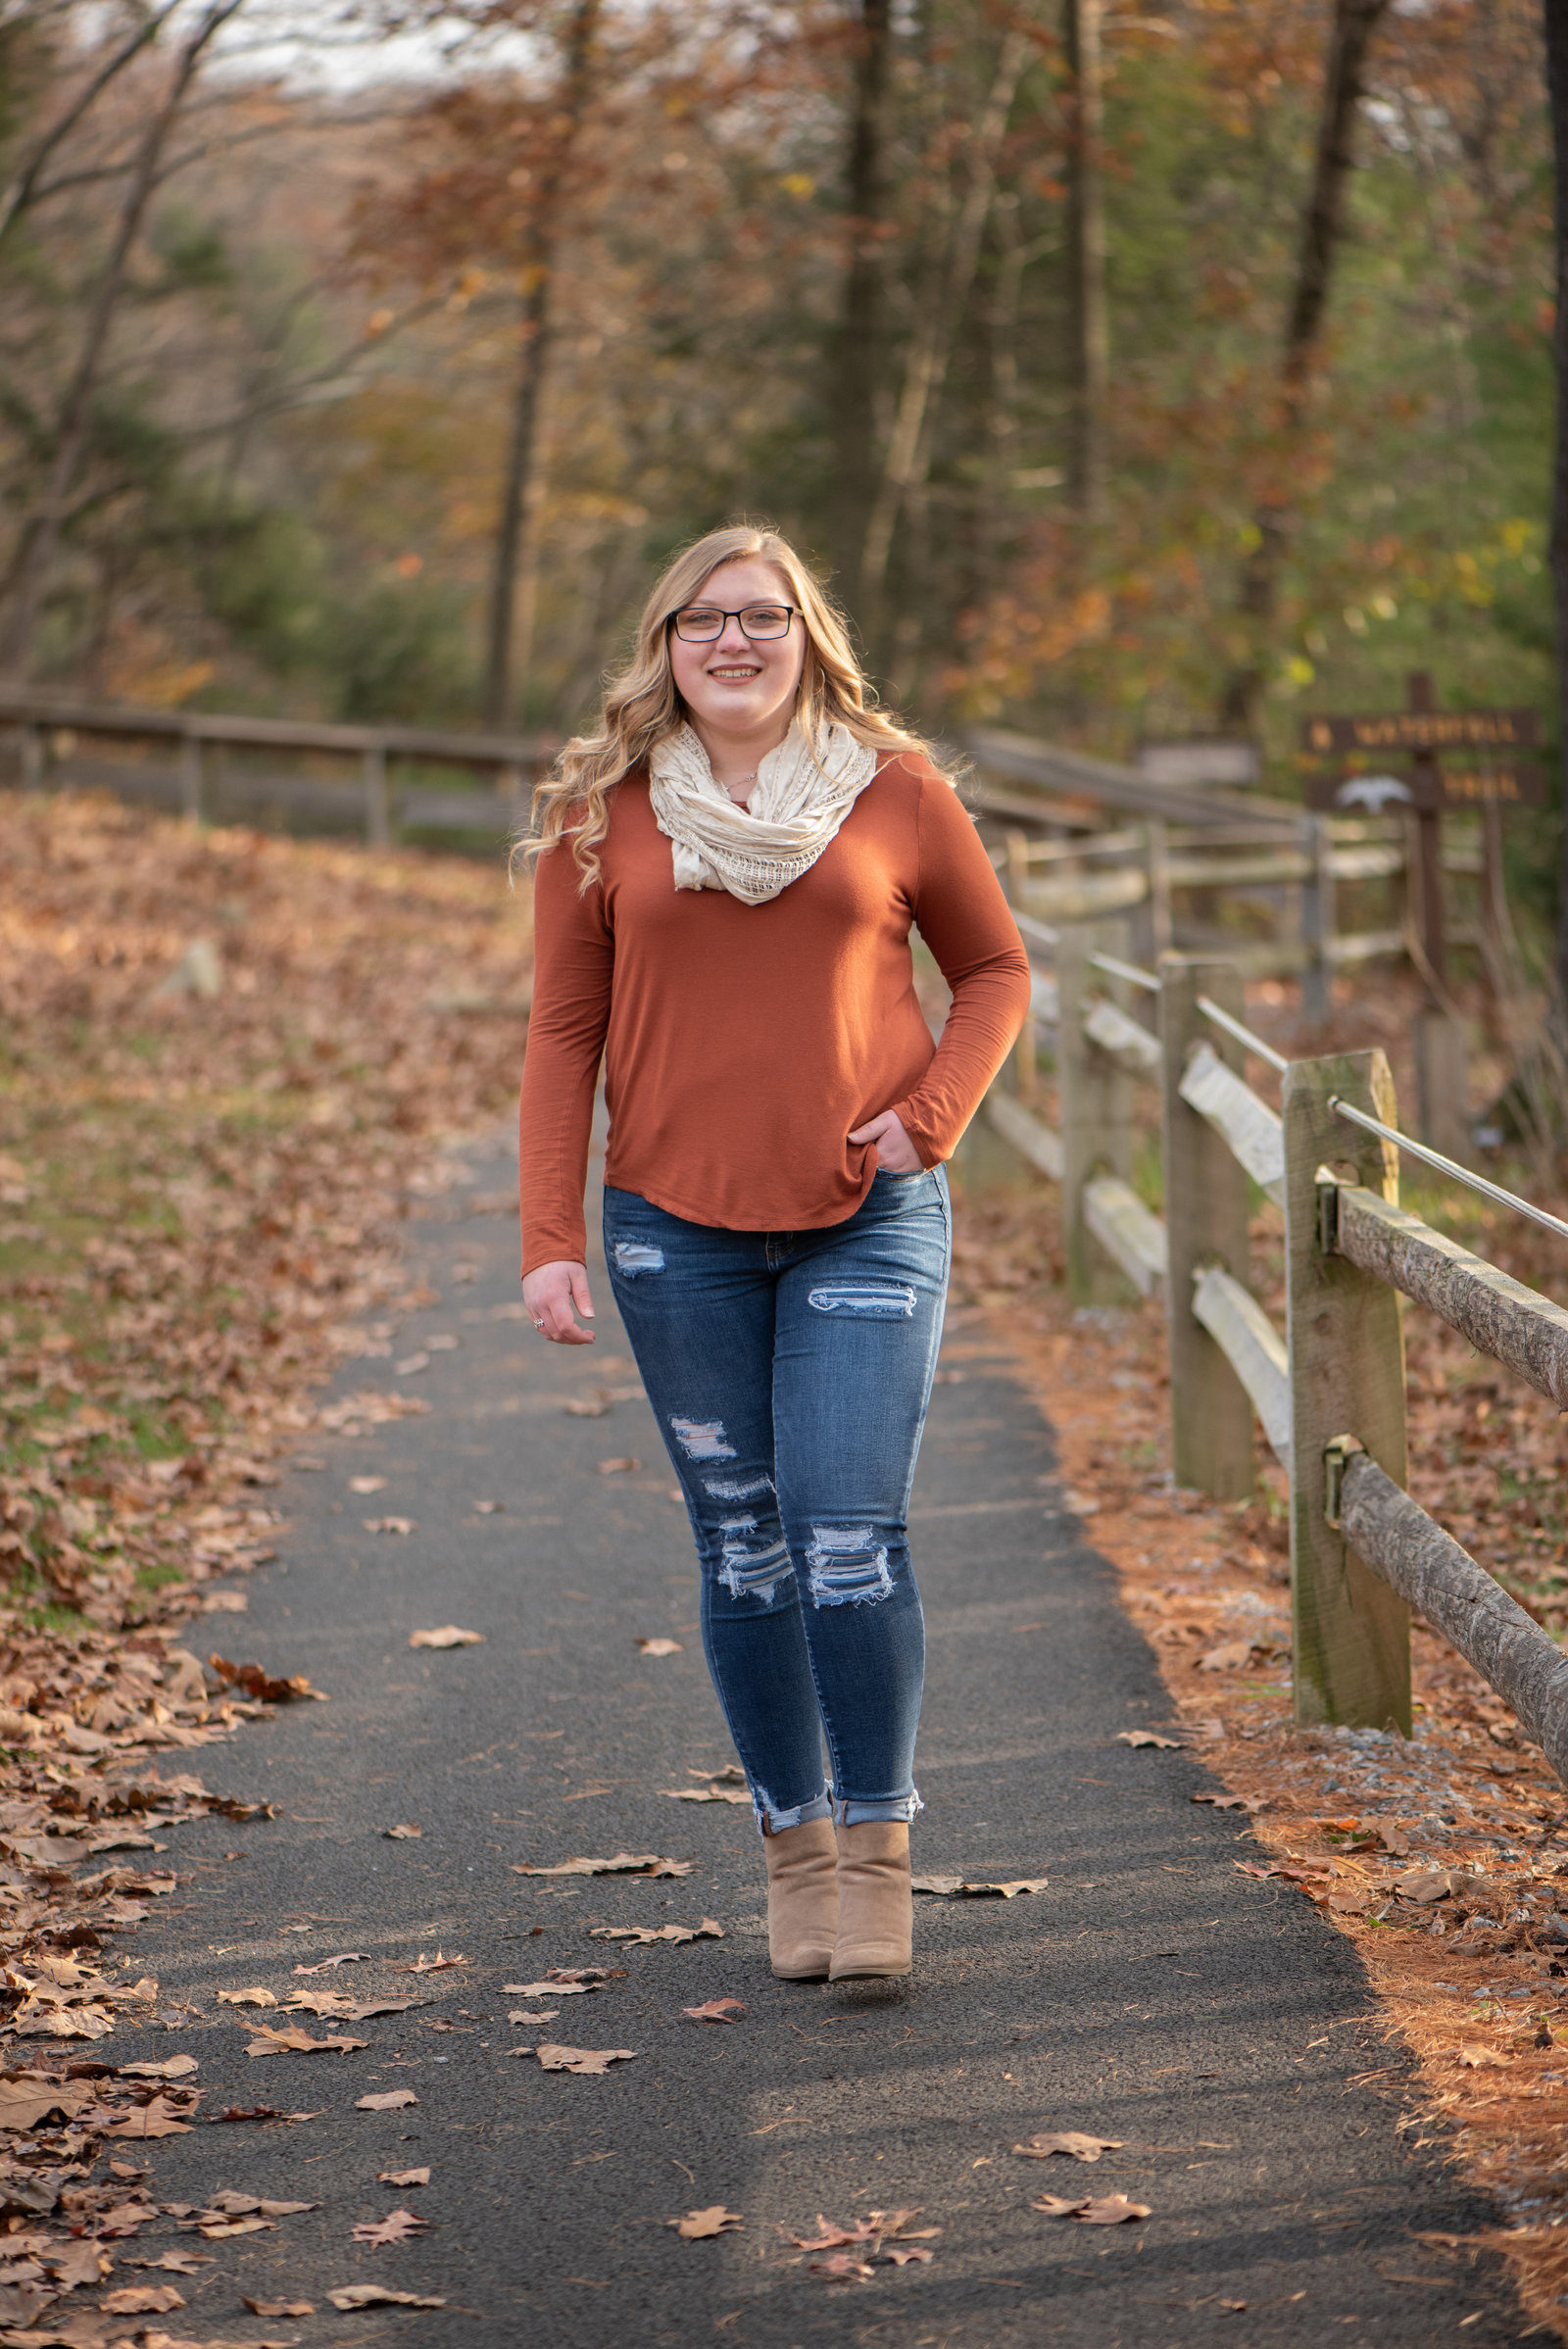 Senior girl in orange top walking on fence-lined path